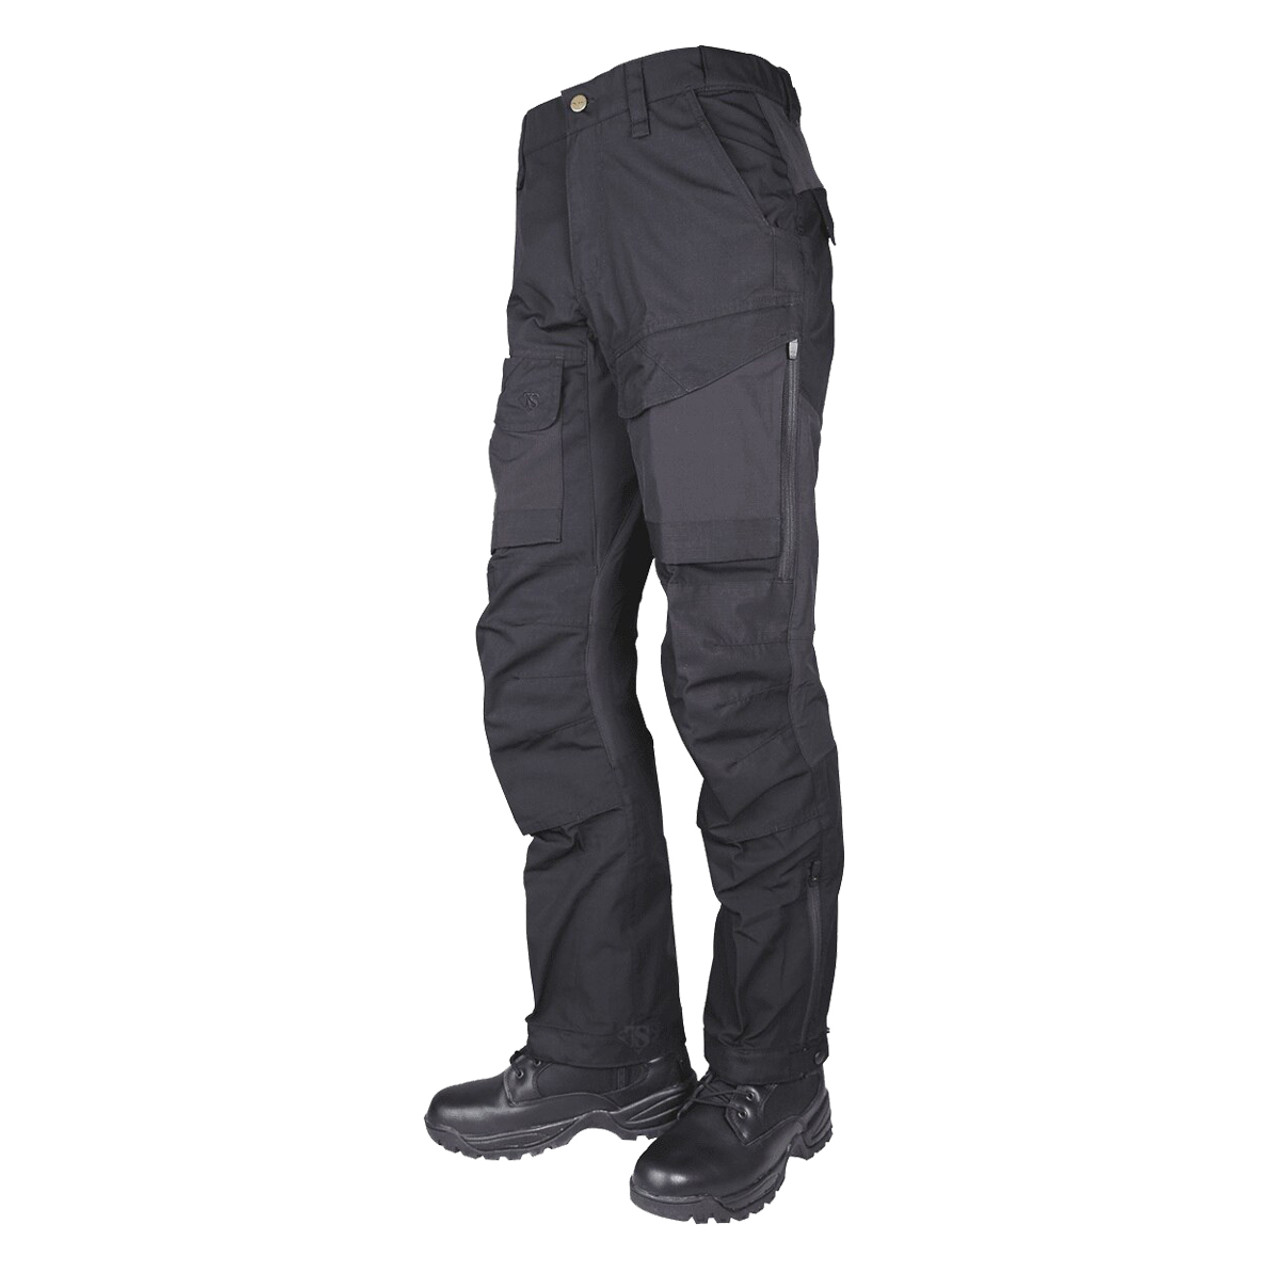 Tru-Spec Men's 24/7 Series Polyester/Cotton Rip-Stop Xpedition Pants